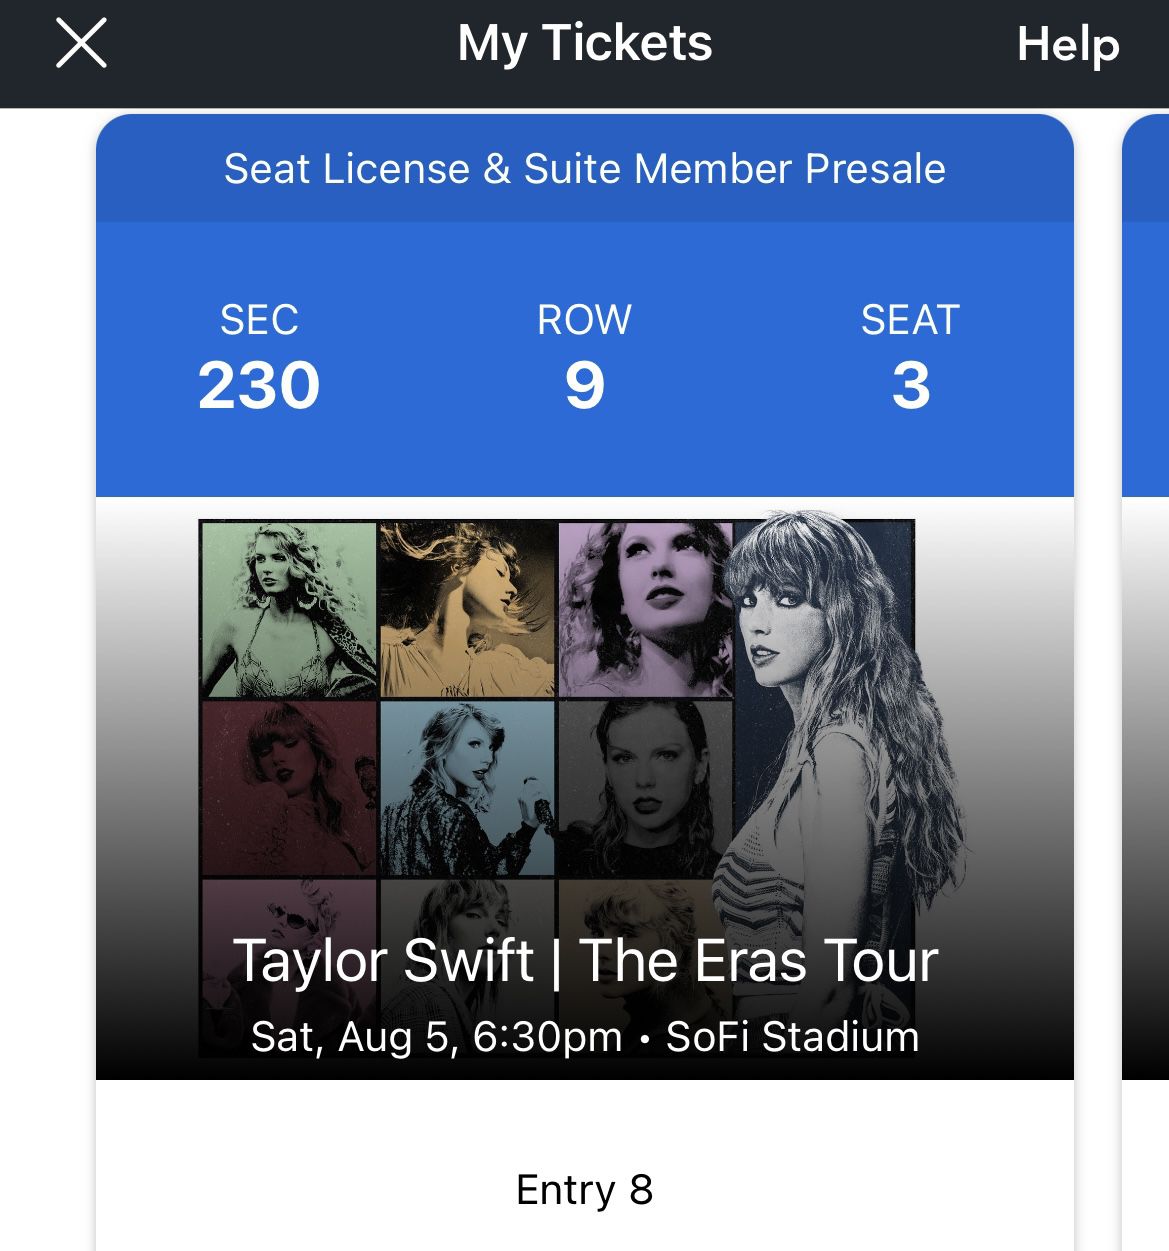 Taylor Swift The Eras Tour Saturday Aug 5 Sofi Stadium Tickets